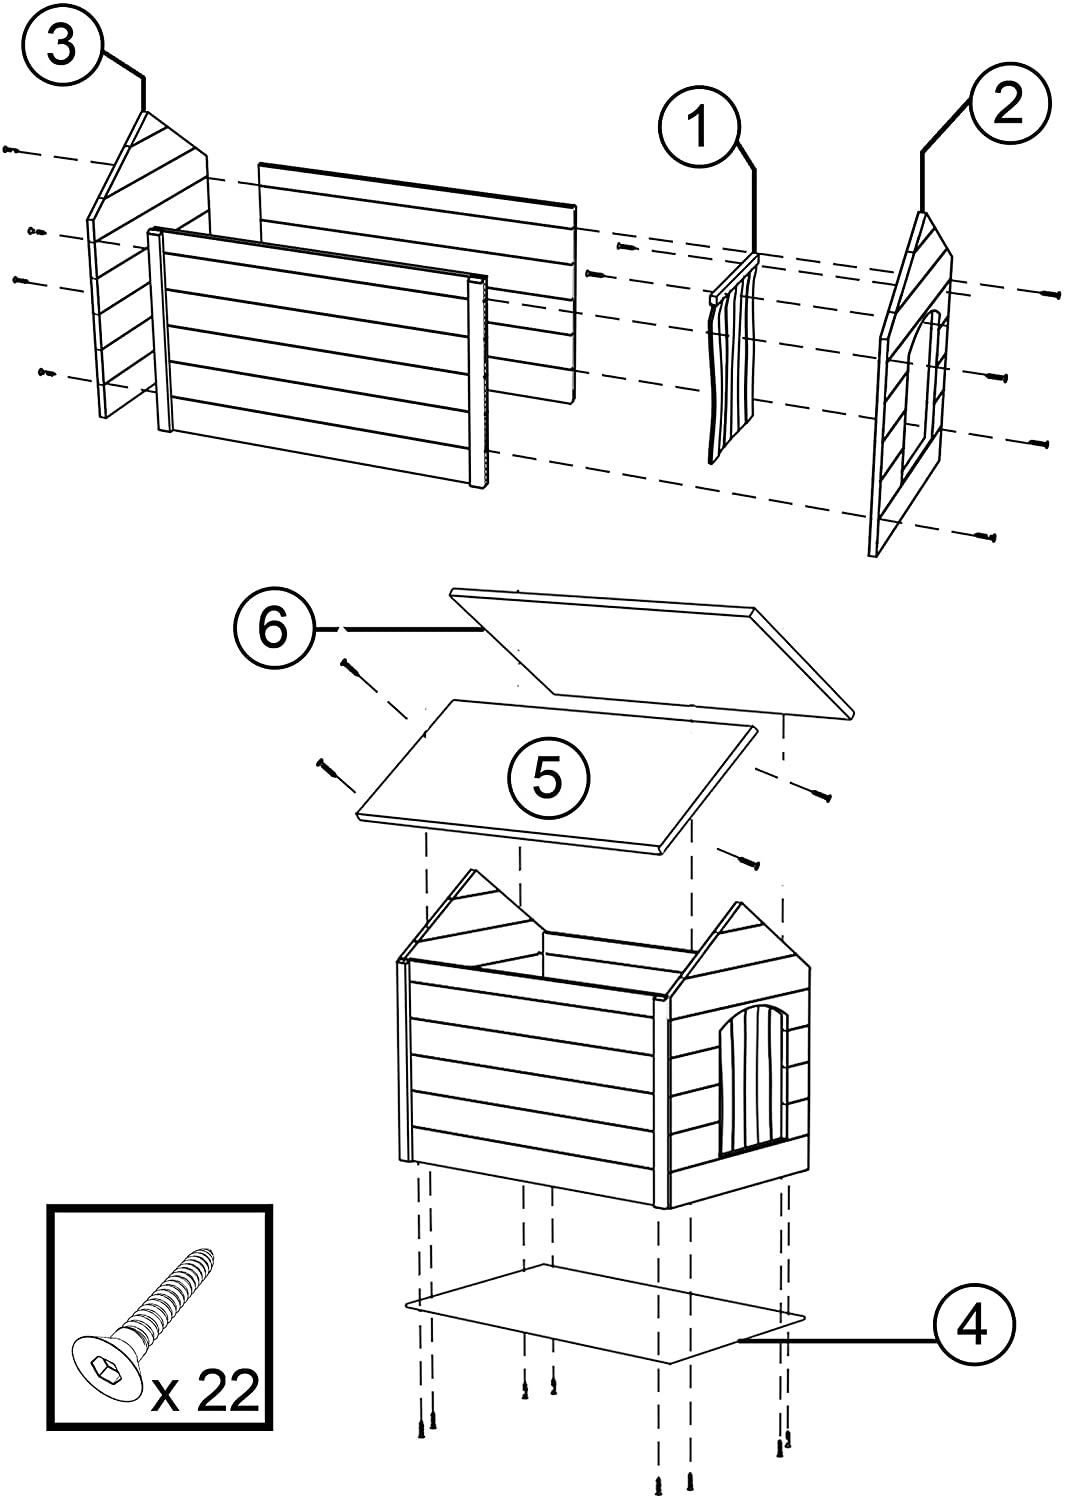  Novamat - Caseta de madera para perros, extra grande, paredes aisladas, resistente a la intemperie, jardín, terraza, diferentes variantes 